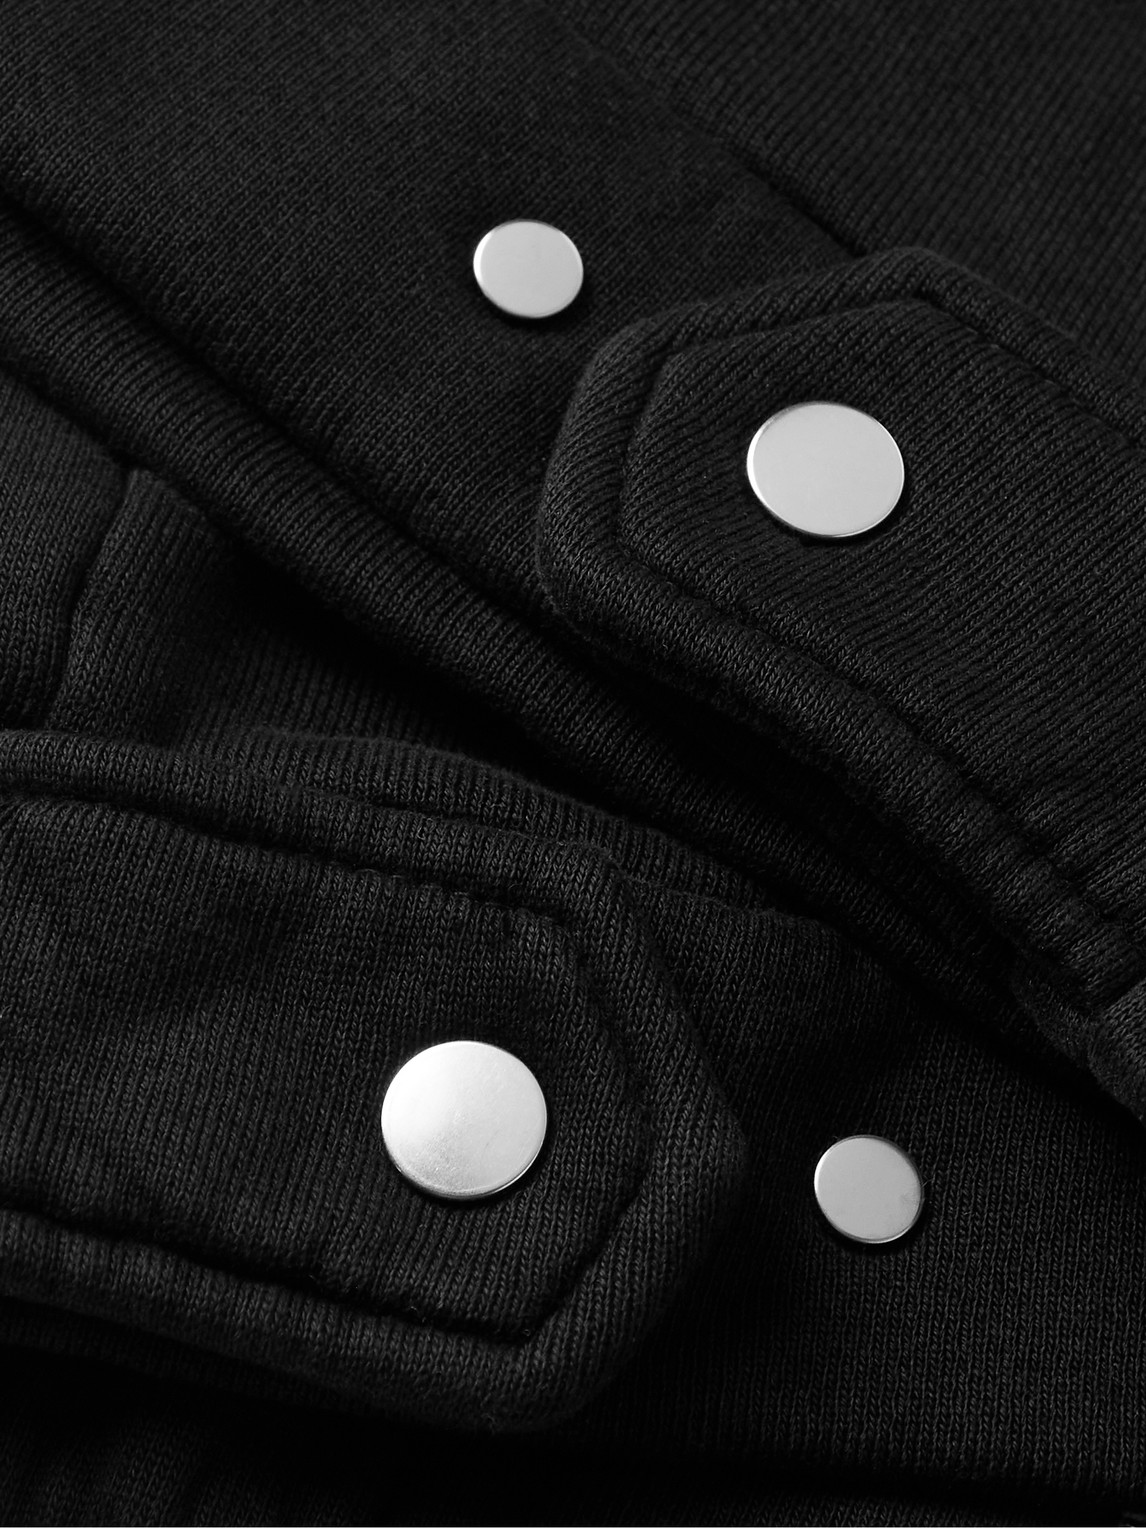 Les Tien Cotton-jersey Bomber Jacket - Men - Charcoal Coats and Jackets - XL